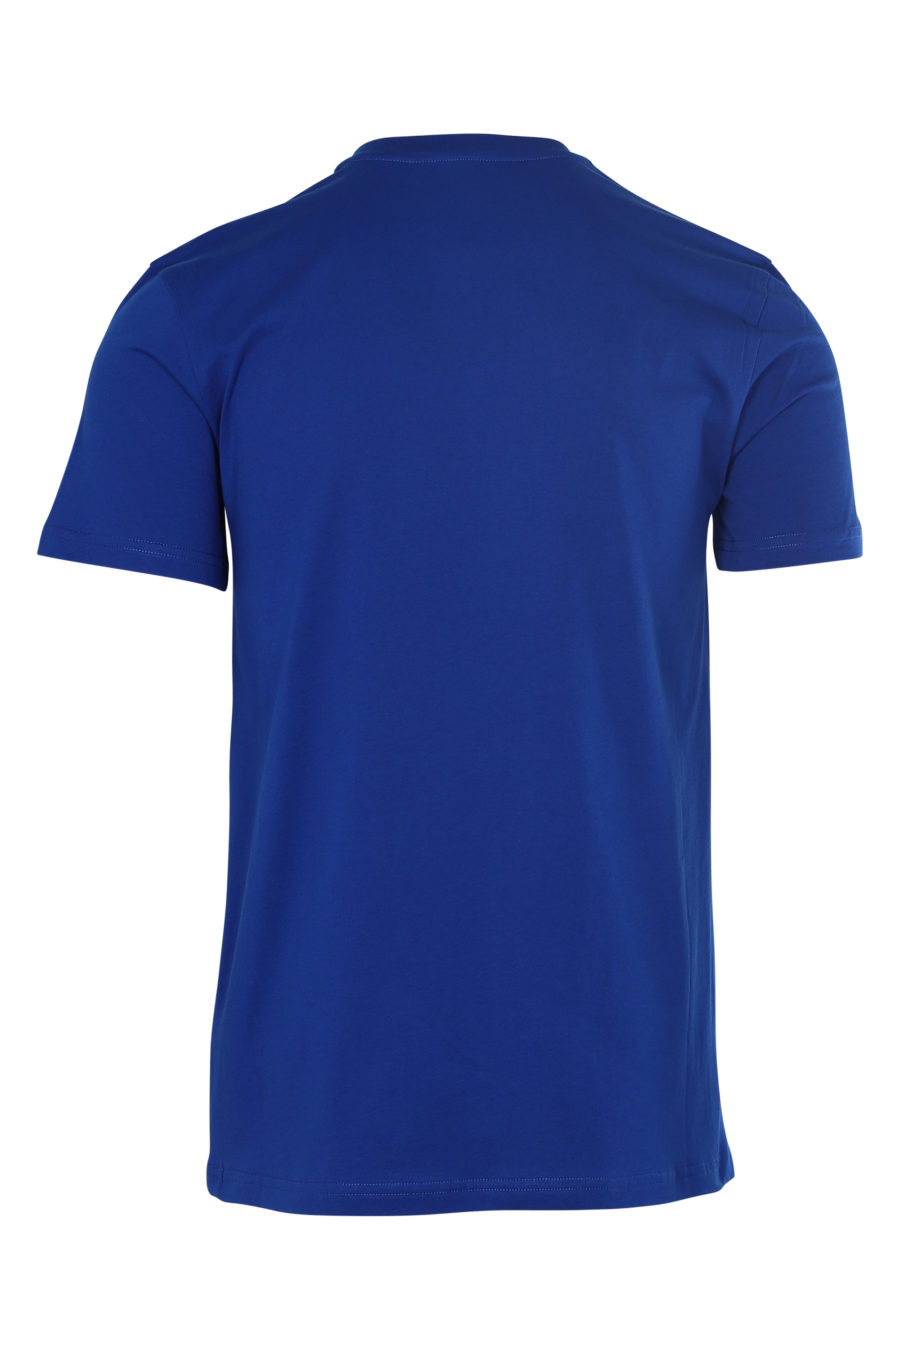 Camiseta azul con logo negro grande - IMG 6109